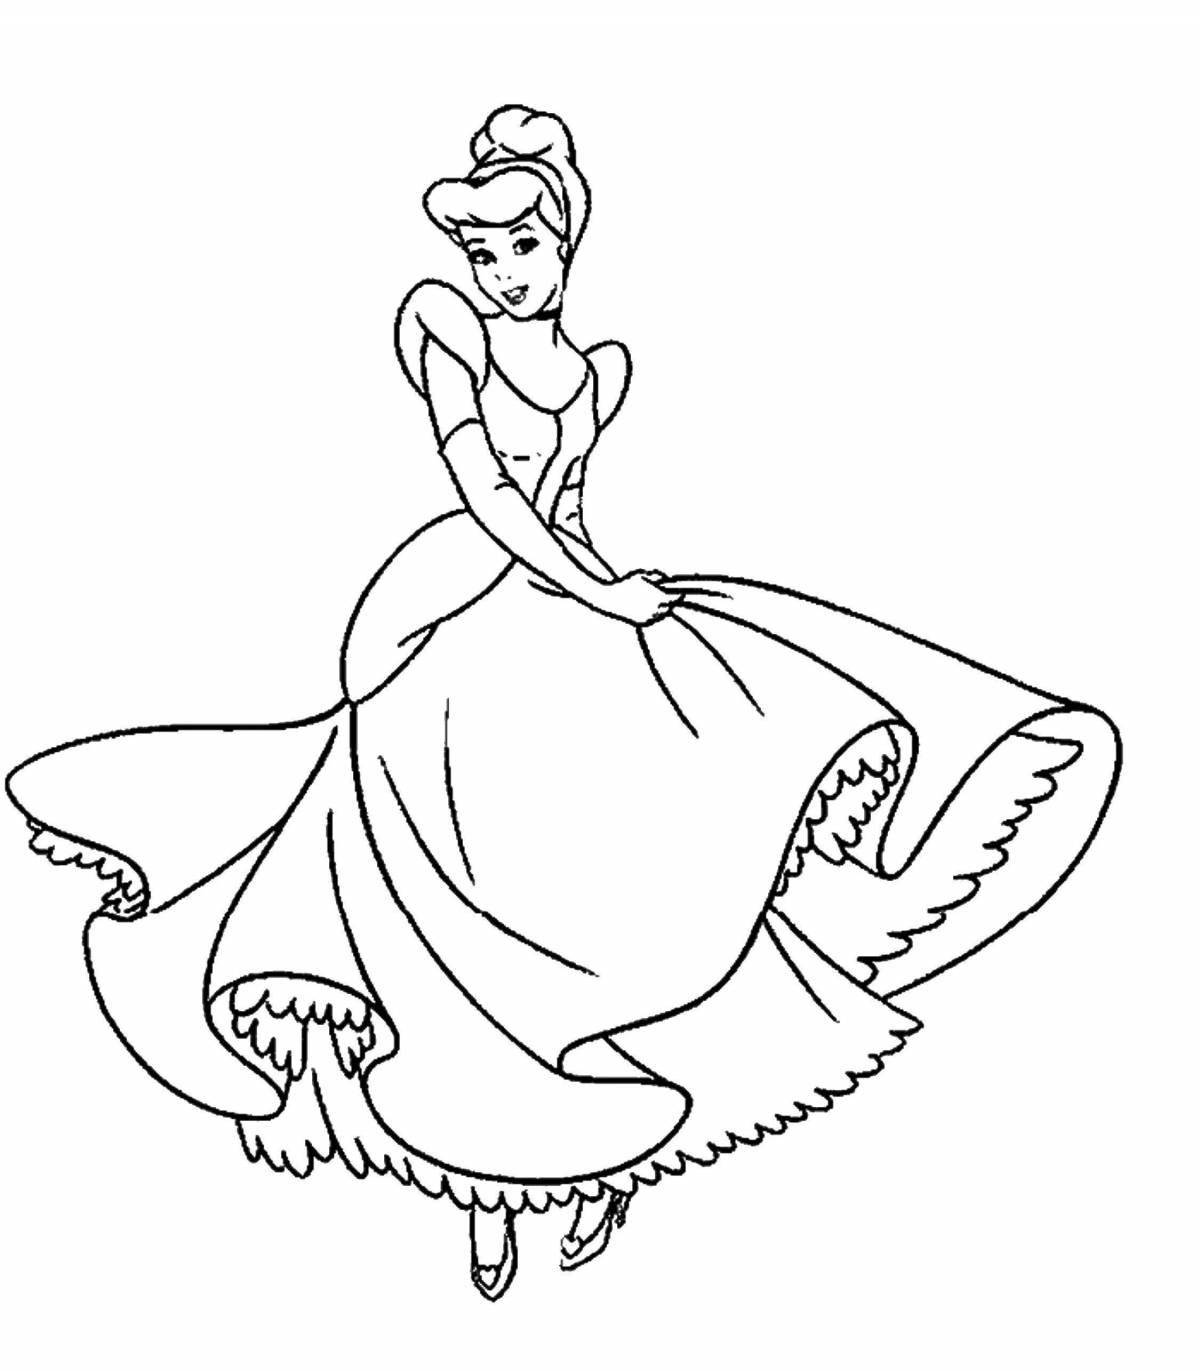 Exquisite princess cinderella coloring book